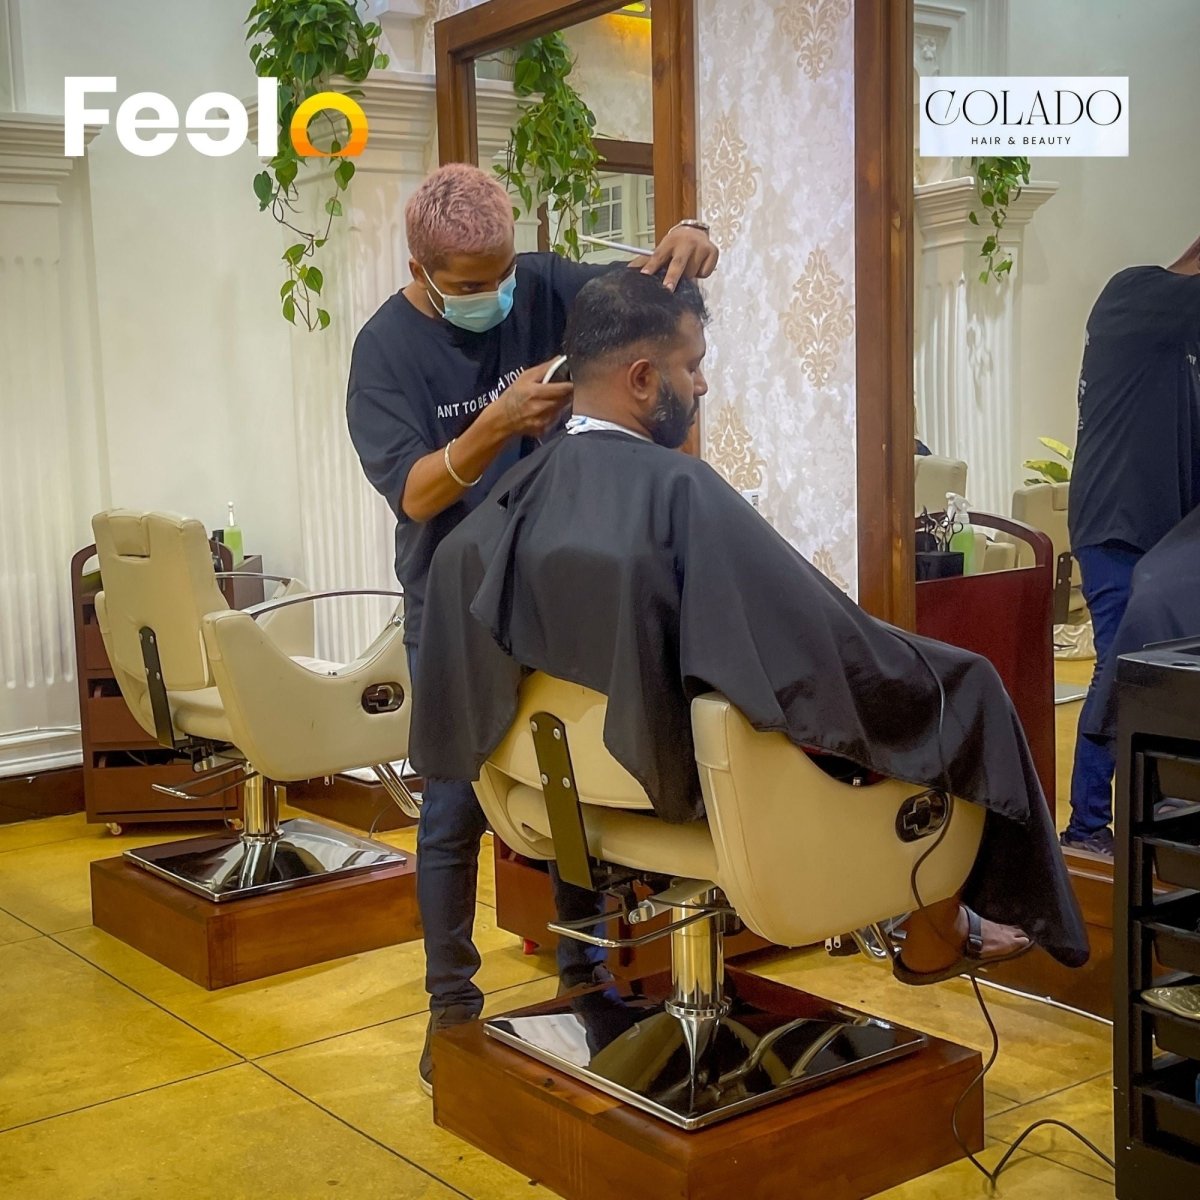 Stylish Gents Hair Cut + 10min Head Massage - COLADO Hair & Beauty, Nugegoda | Feelo